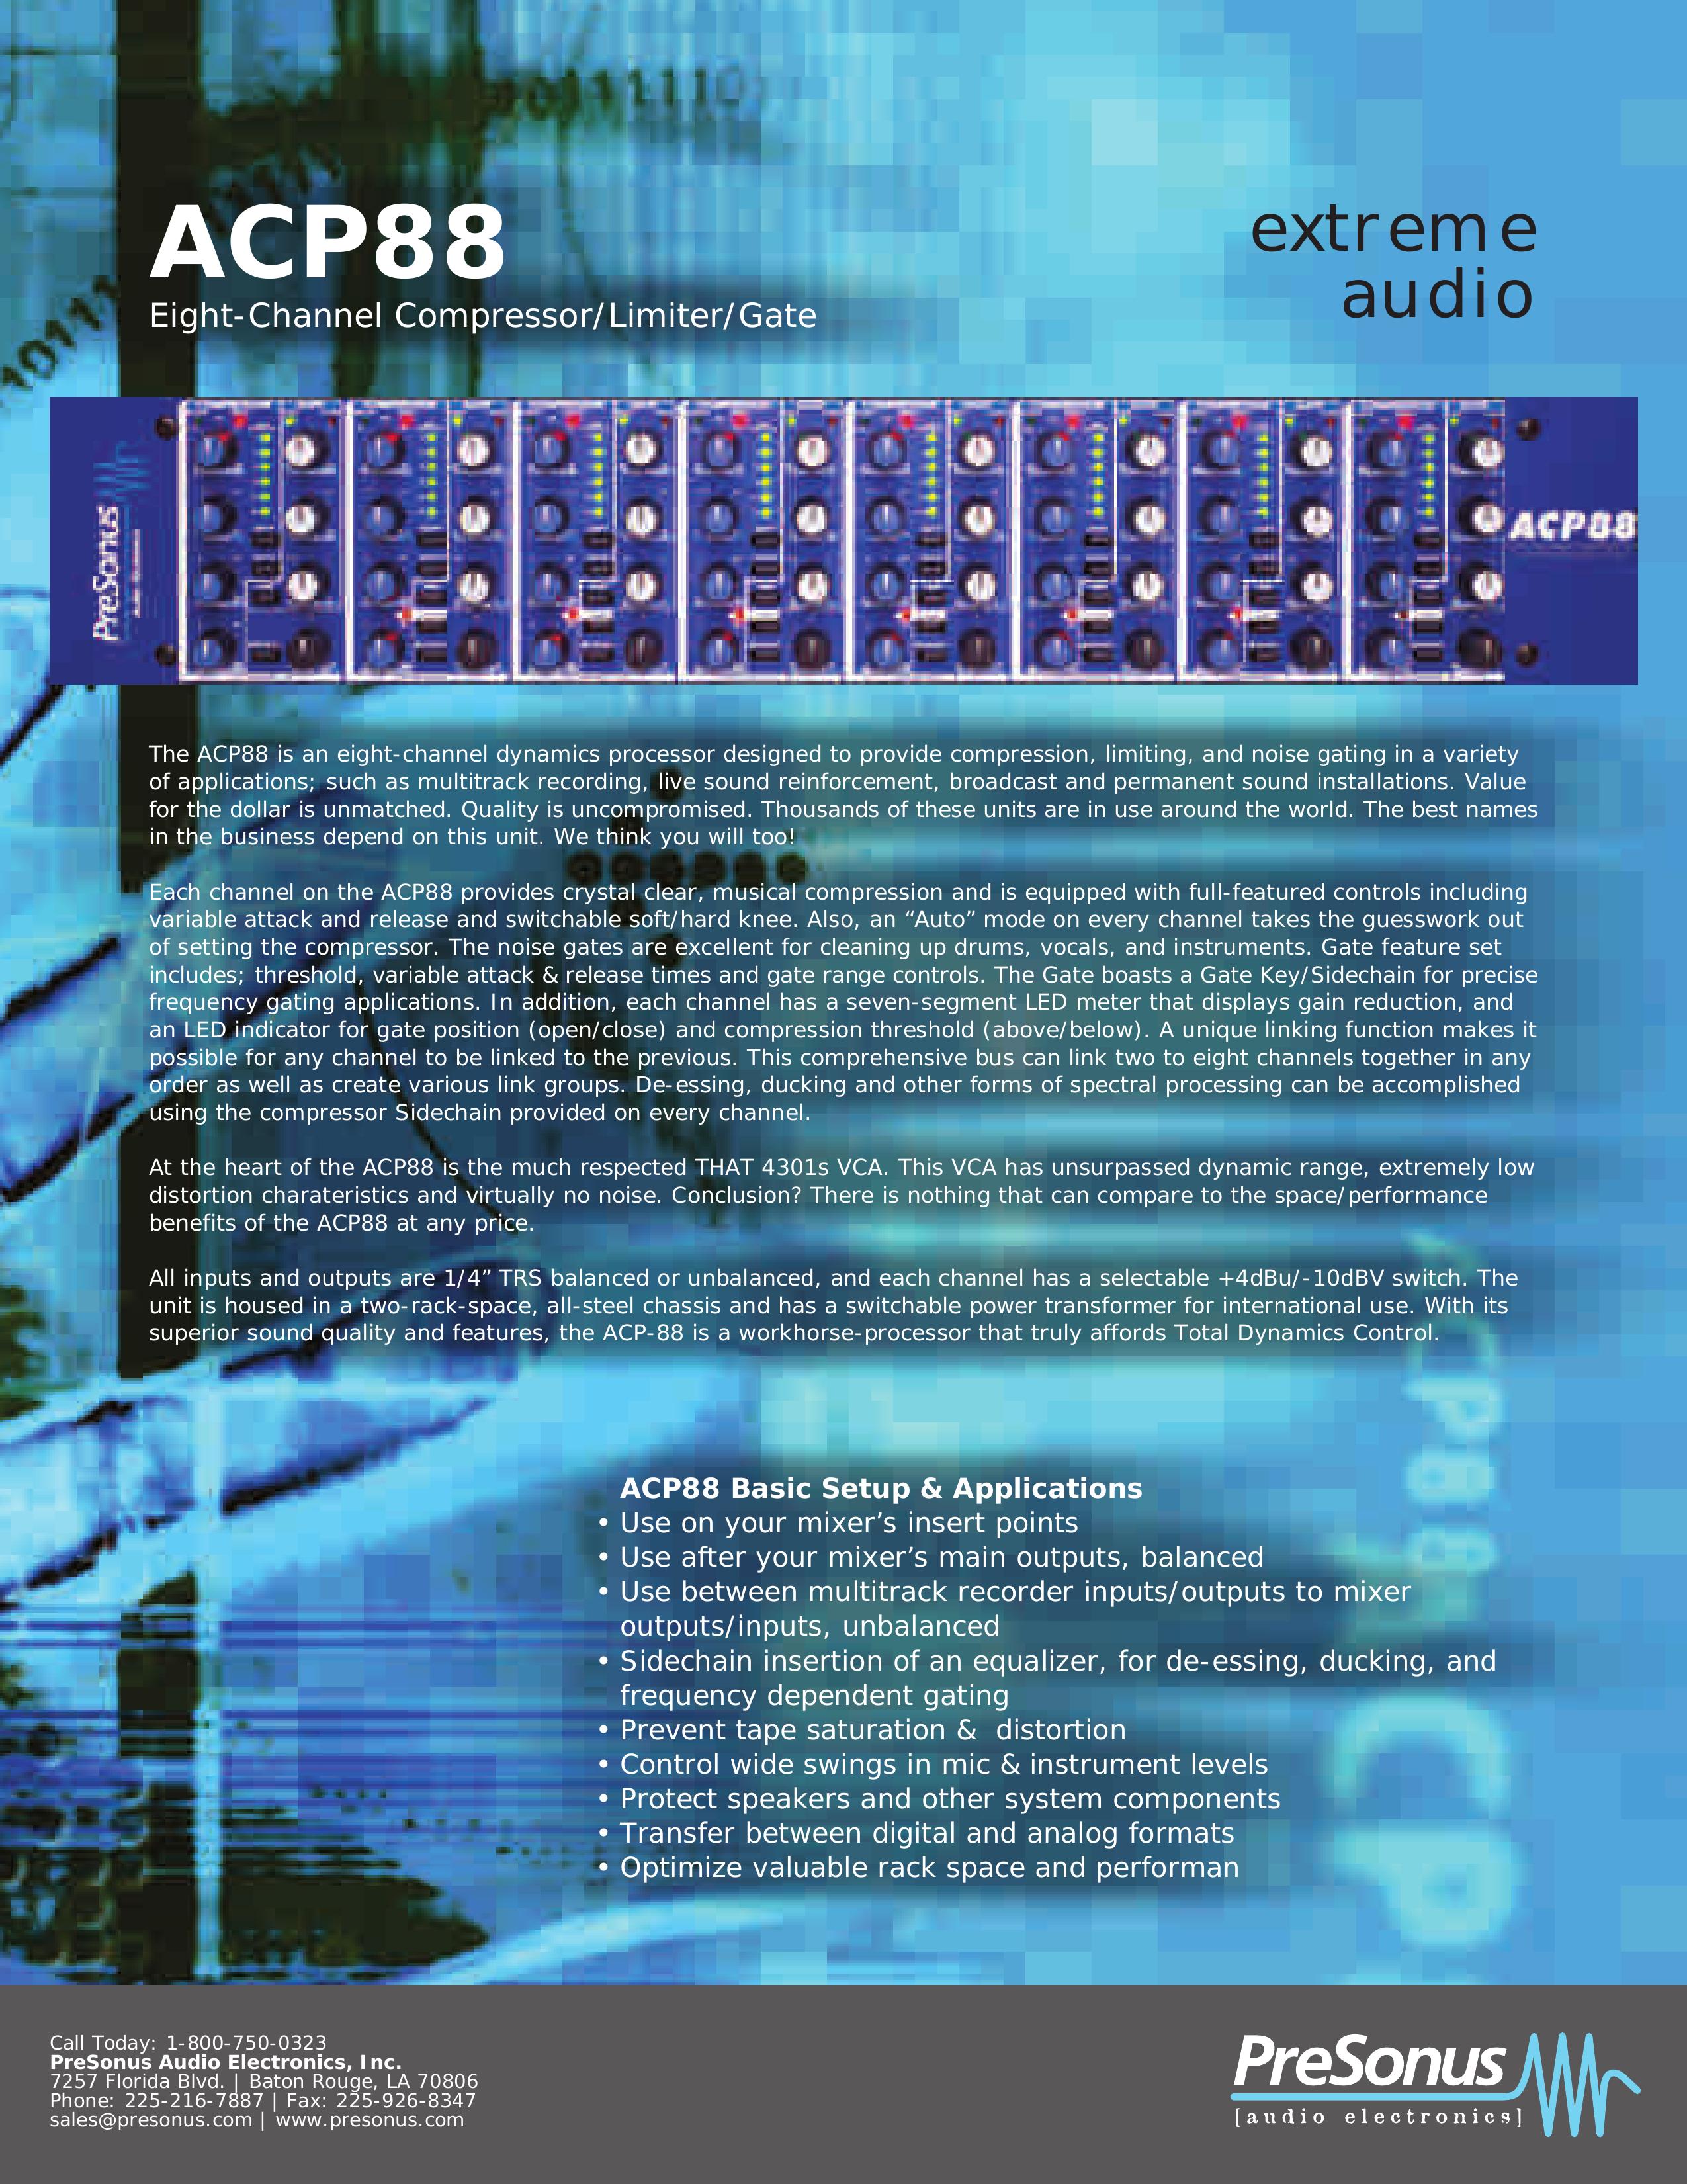 Presonus Audio electronic ACP88 Music Mixer User Manual